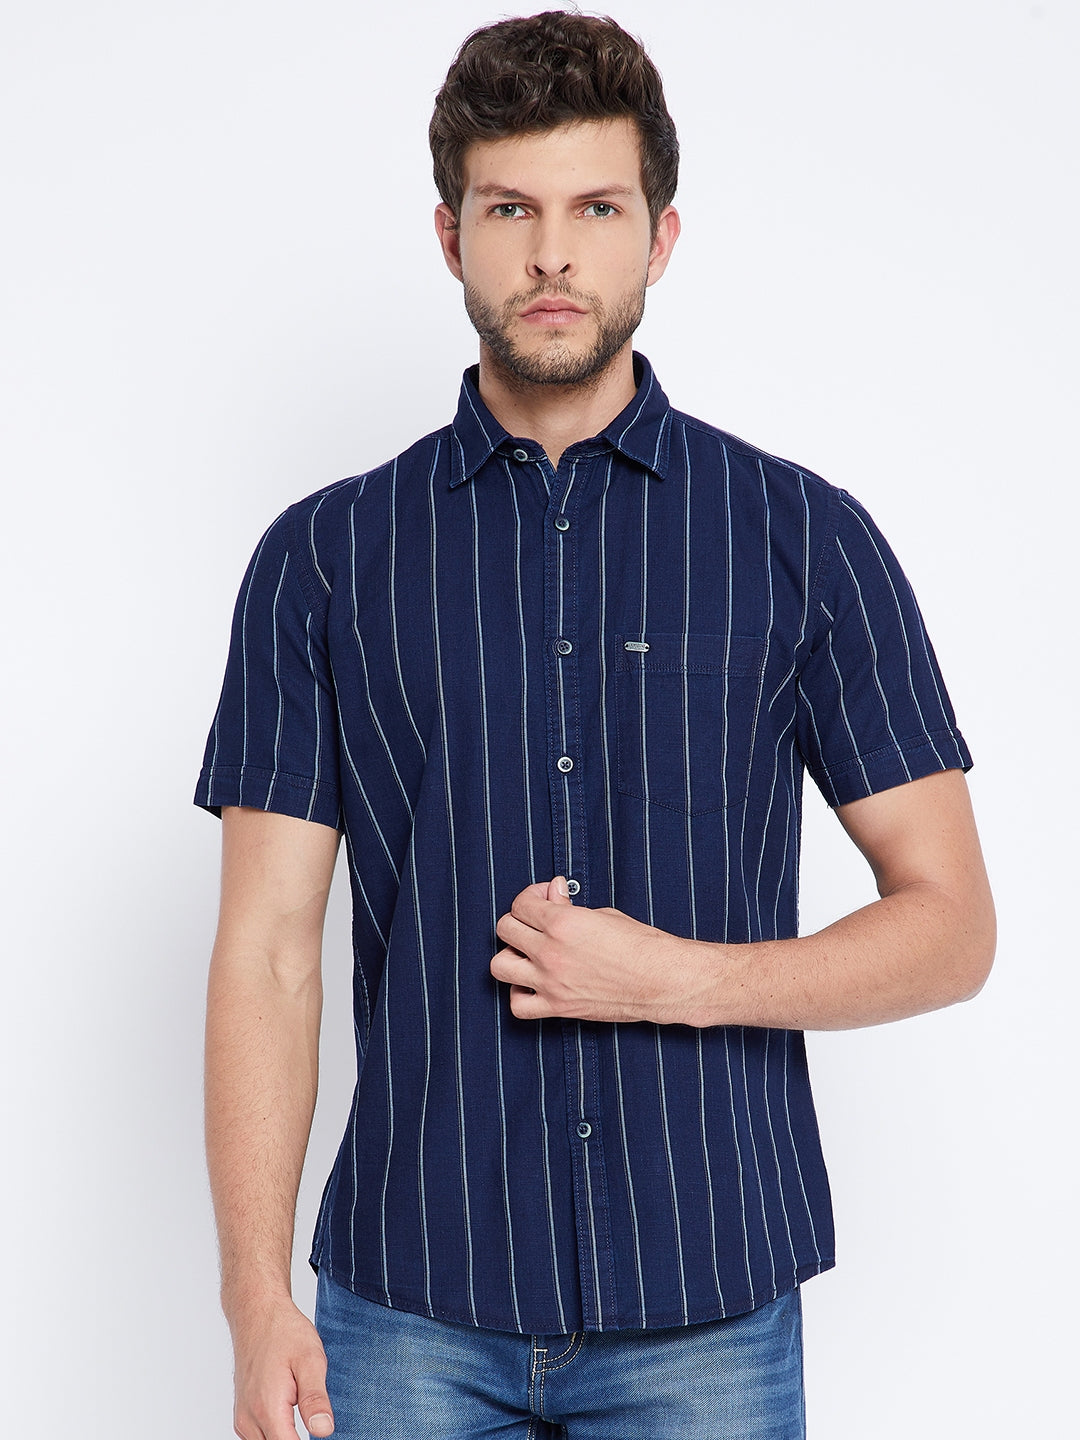 Navy Blue Striped Denim Shirt - Men Shirts